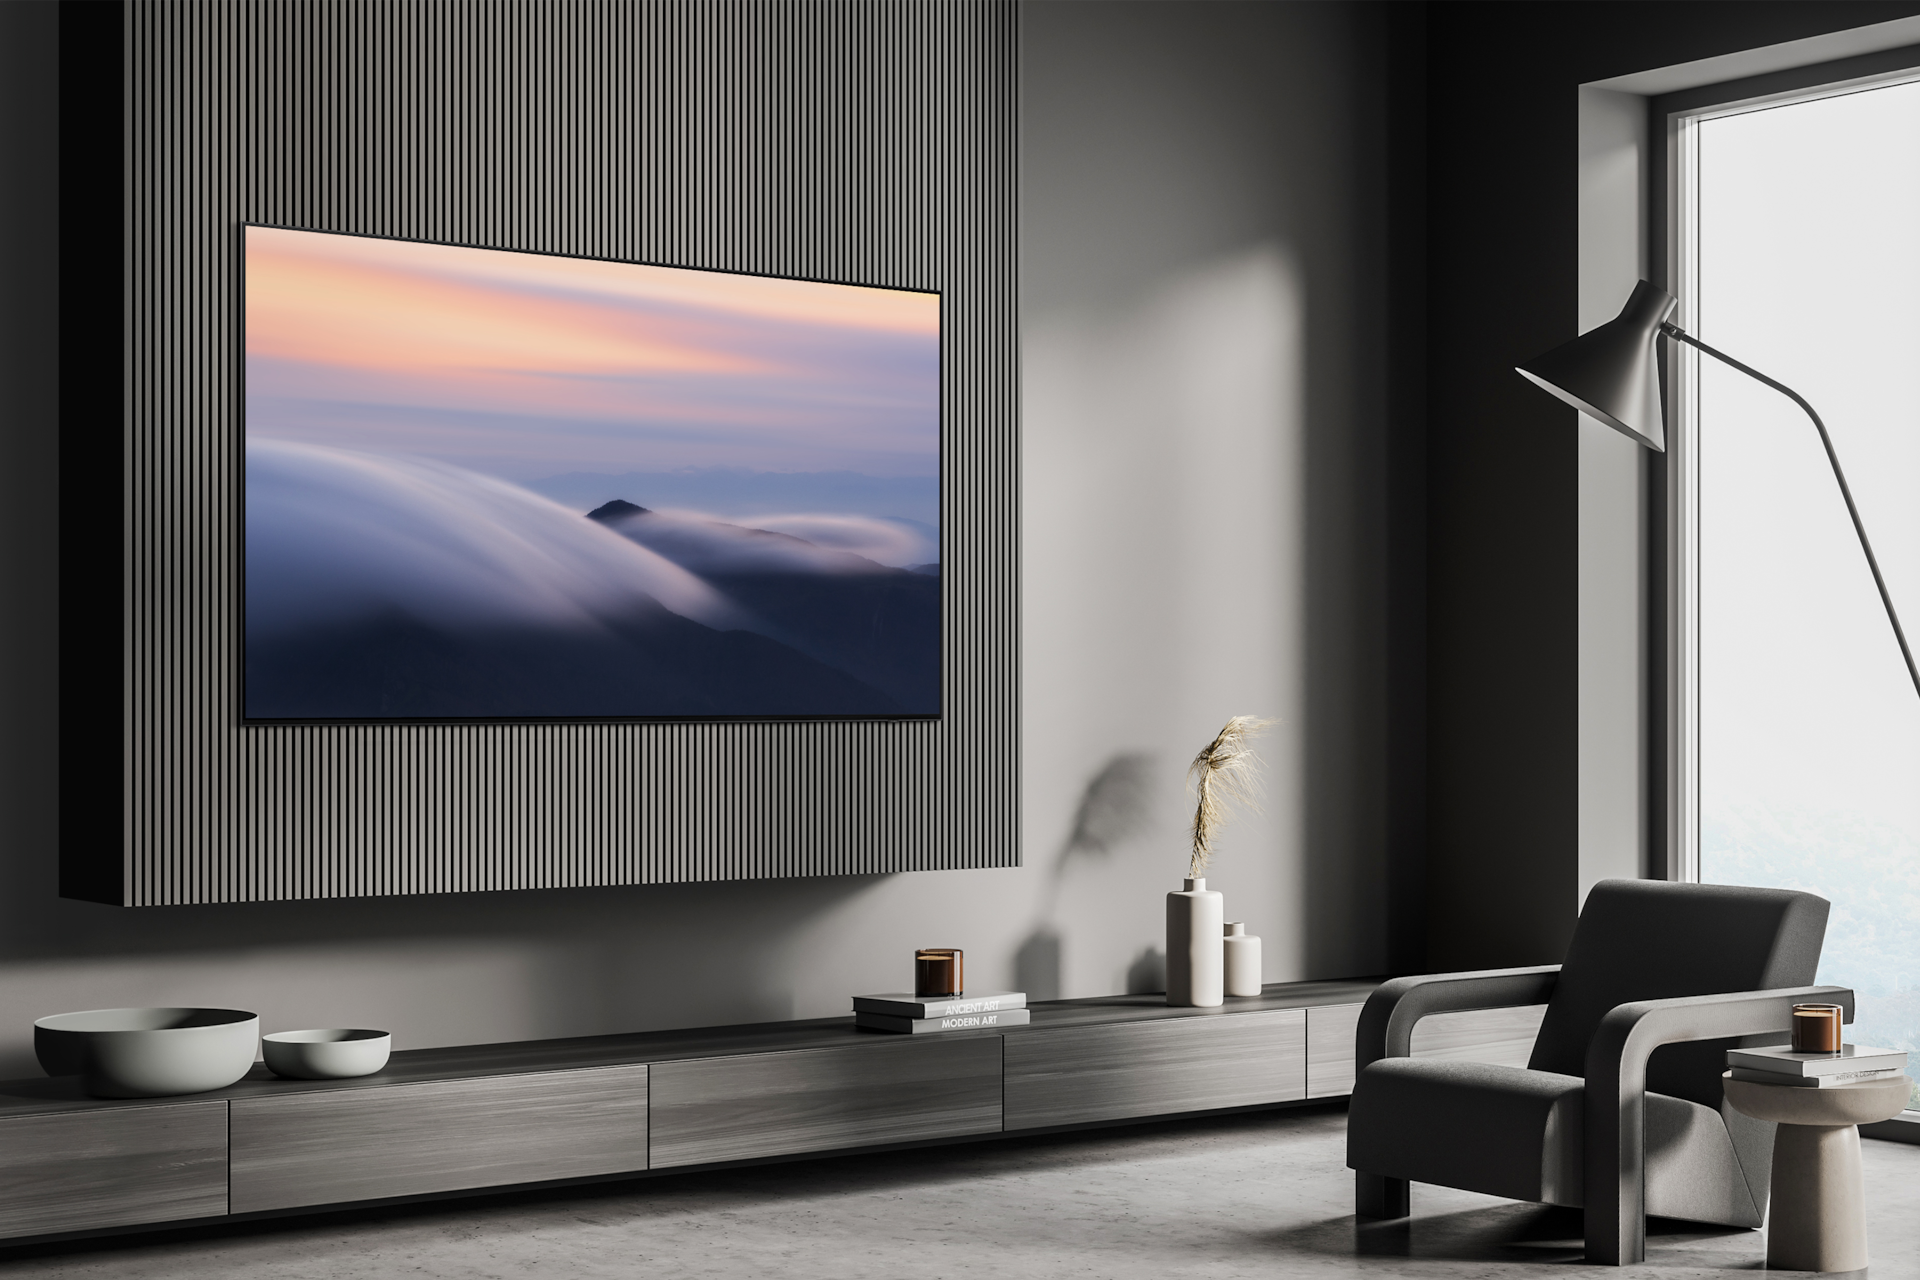 2024 OLED SD90 (122 cm)의  라이프스타일컷으로 벽에 TV가 설치되어 있으며, 화면에는 구름 속에 산 꼭대기가 보입니다. TV 하단에는 장식장이 있으며 그 위에 화분과 그릇들이 있습니다. 장식작 앞에는 1인용 소파가 있으며 그 뒤에는 조명이 있는 라이프스타일 컷입니다. 